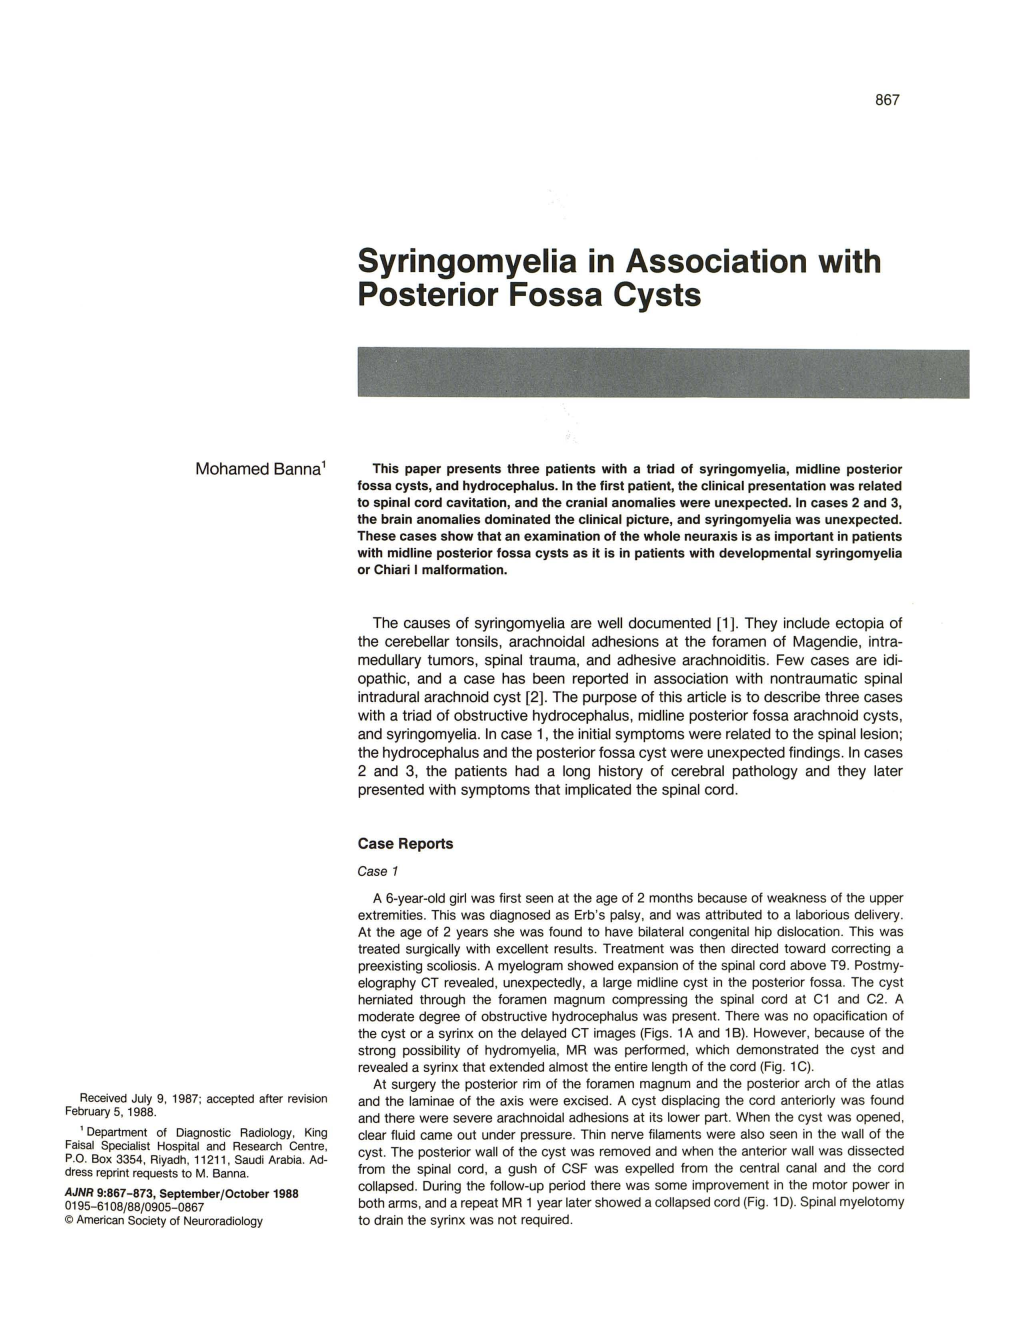 Syringomyelia in Association with Posterior Fossa Cysts